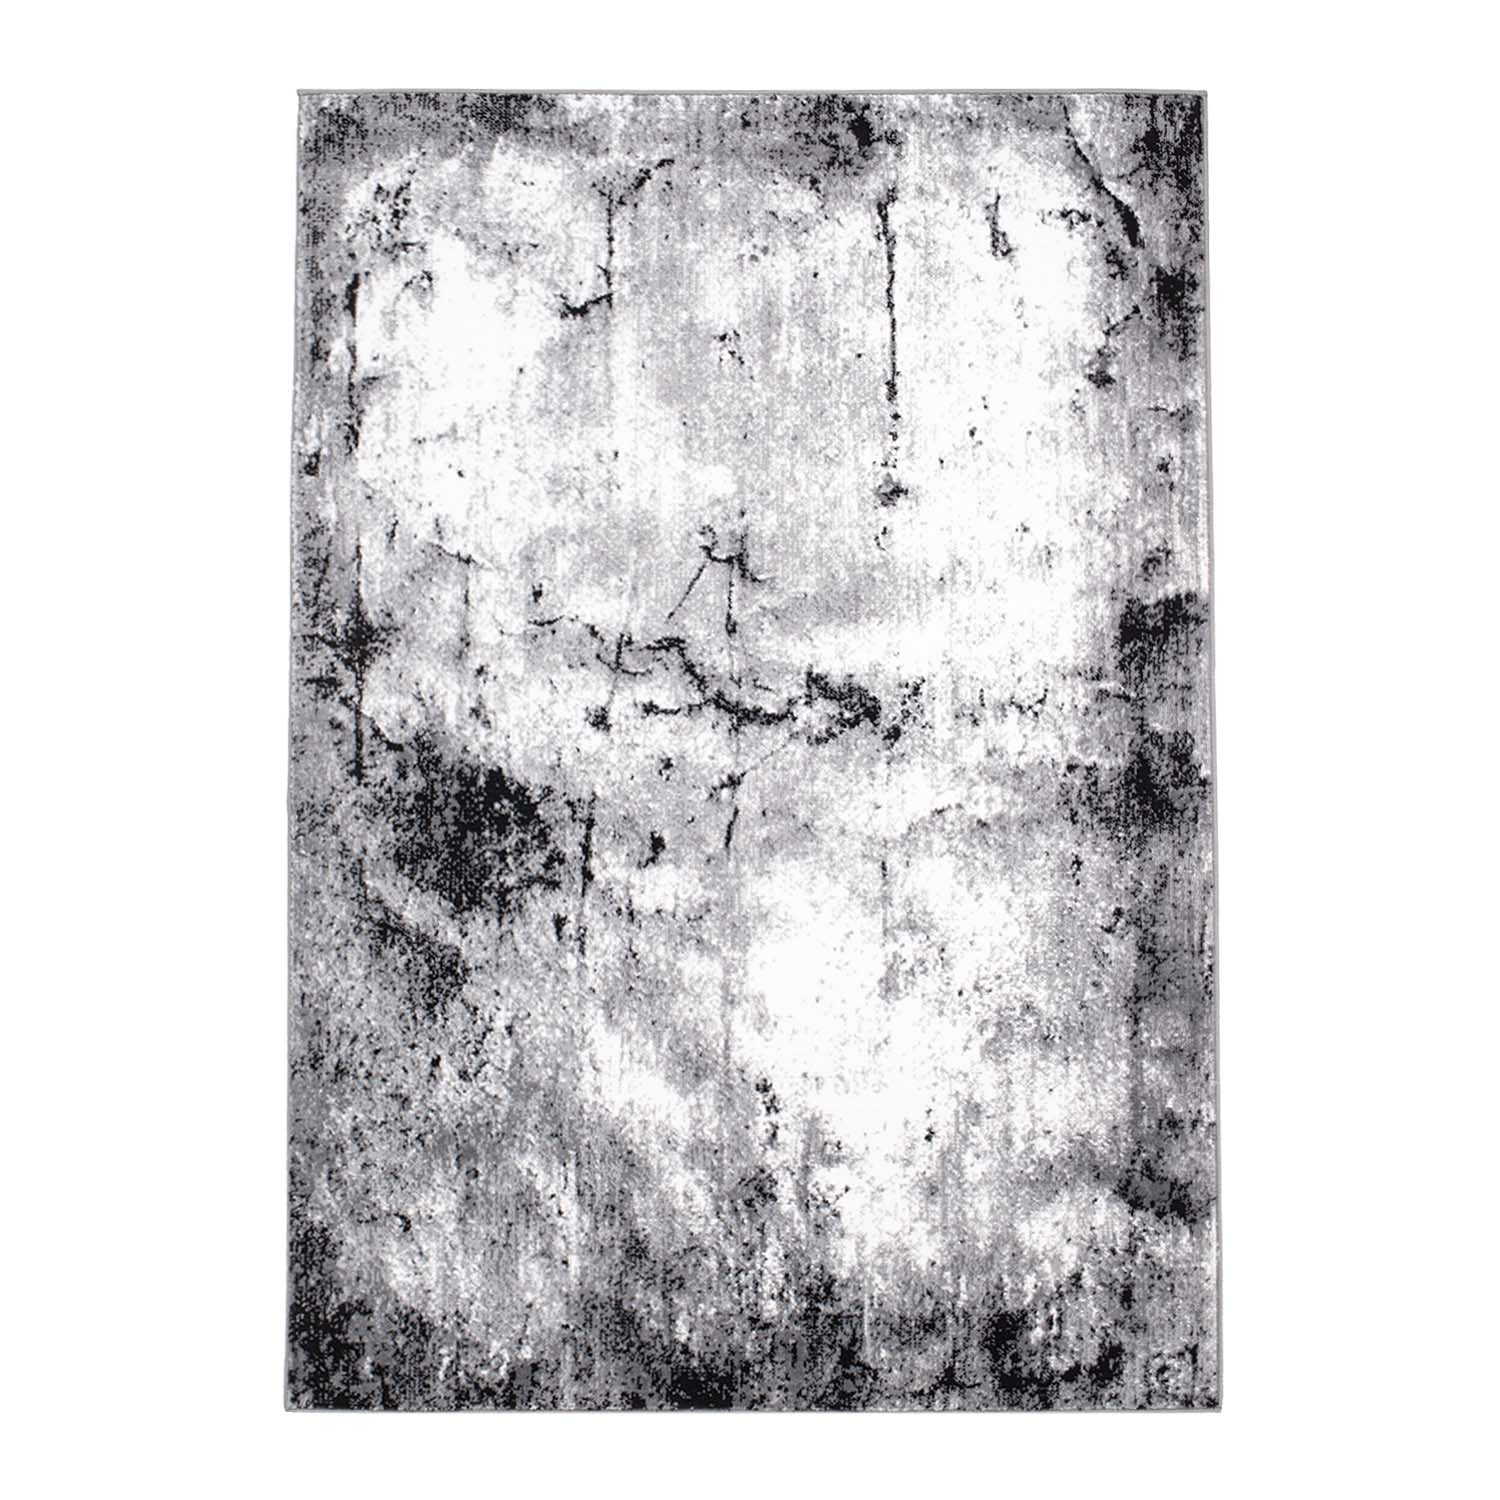 Wilton rug - Nayem (grey)